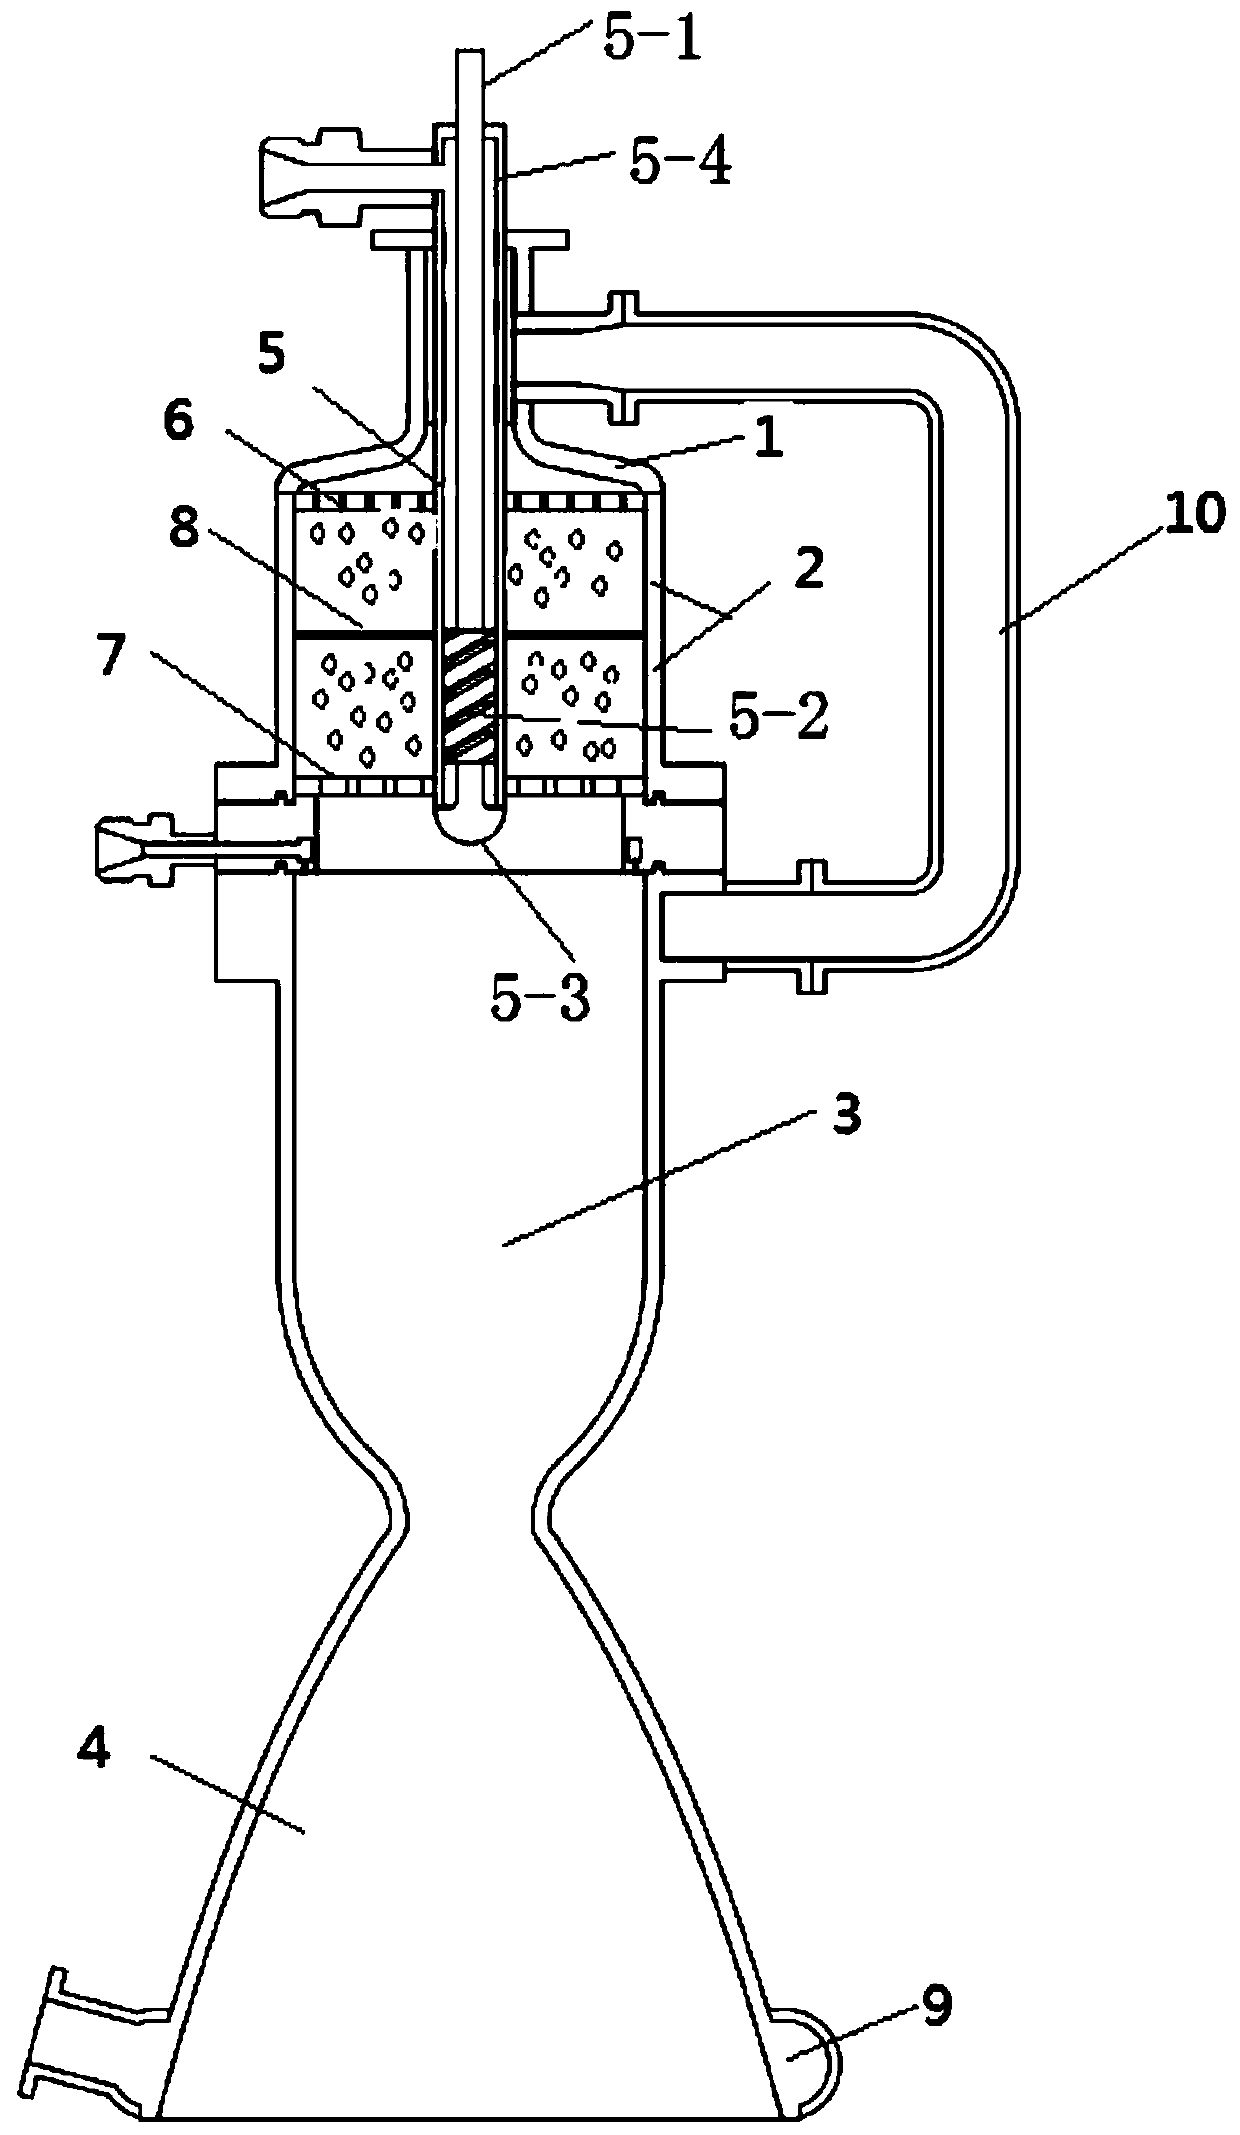 Hydrogen peroxide kerosene variable working condition thrust chamber adopting syringe injector